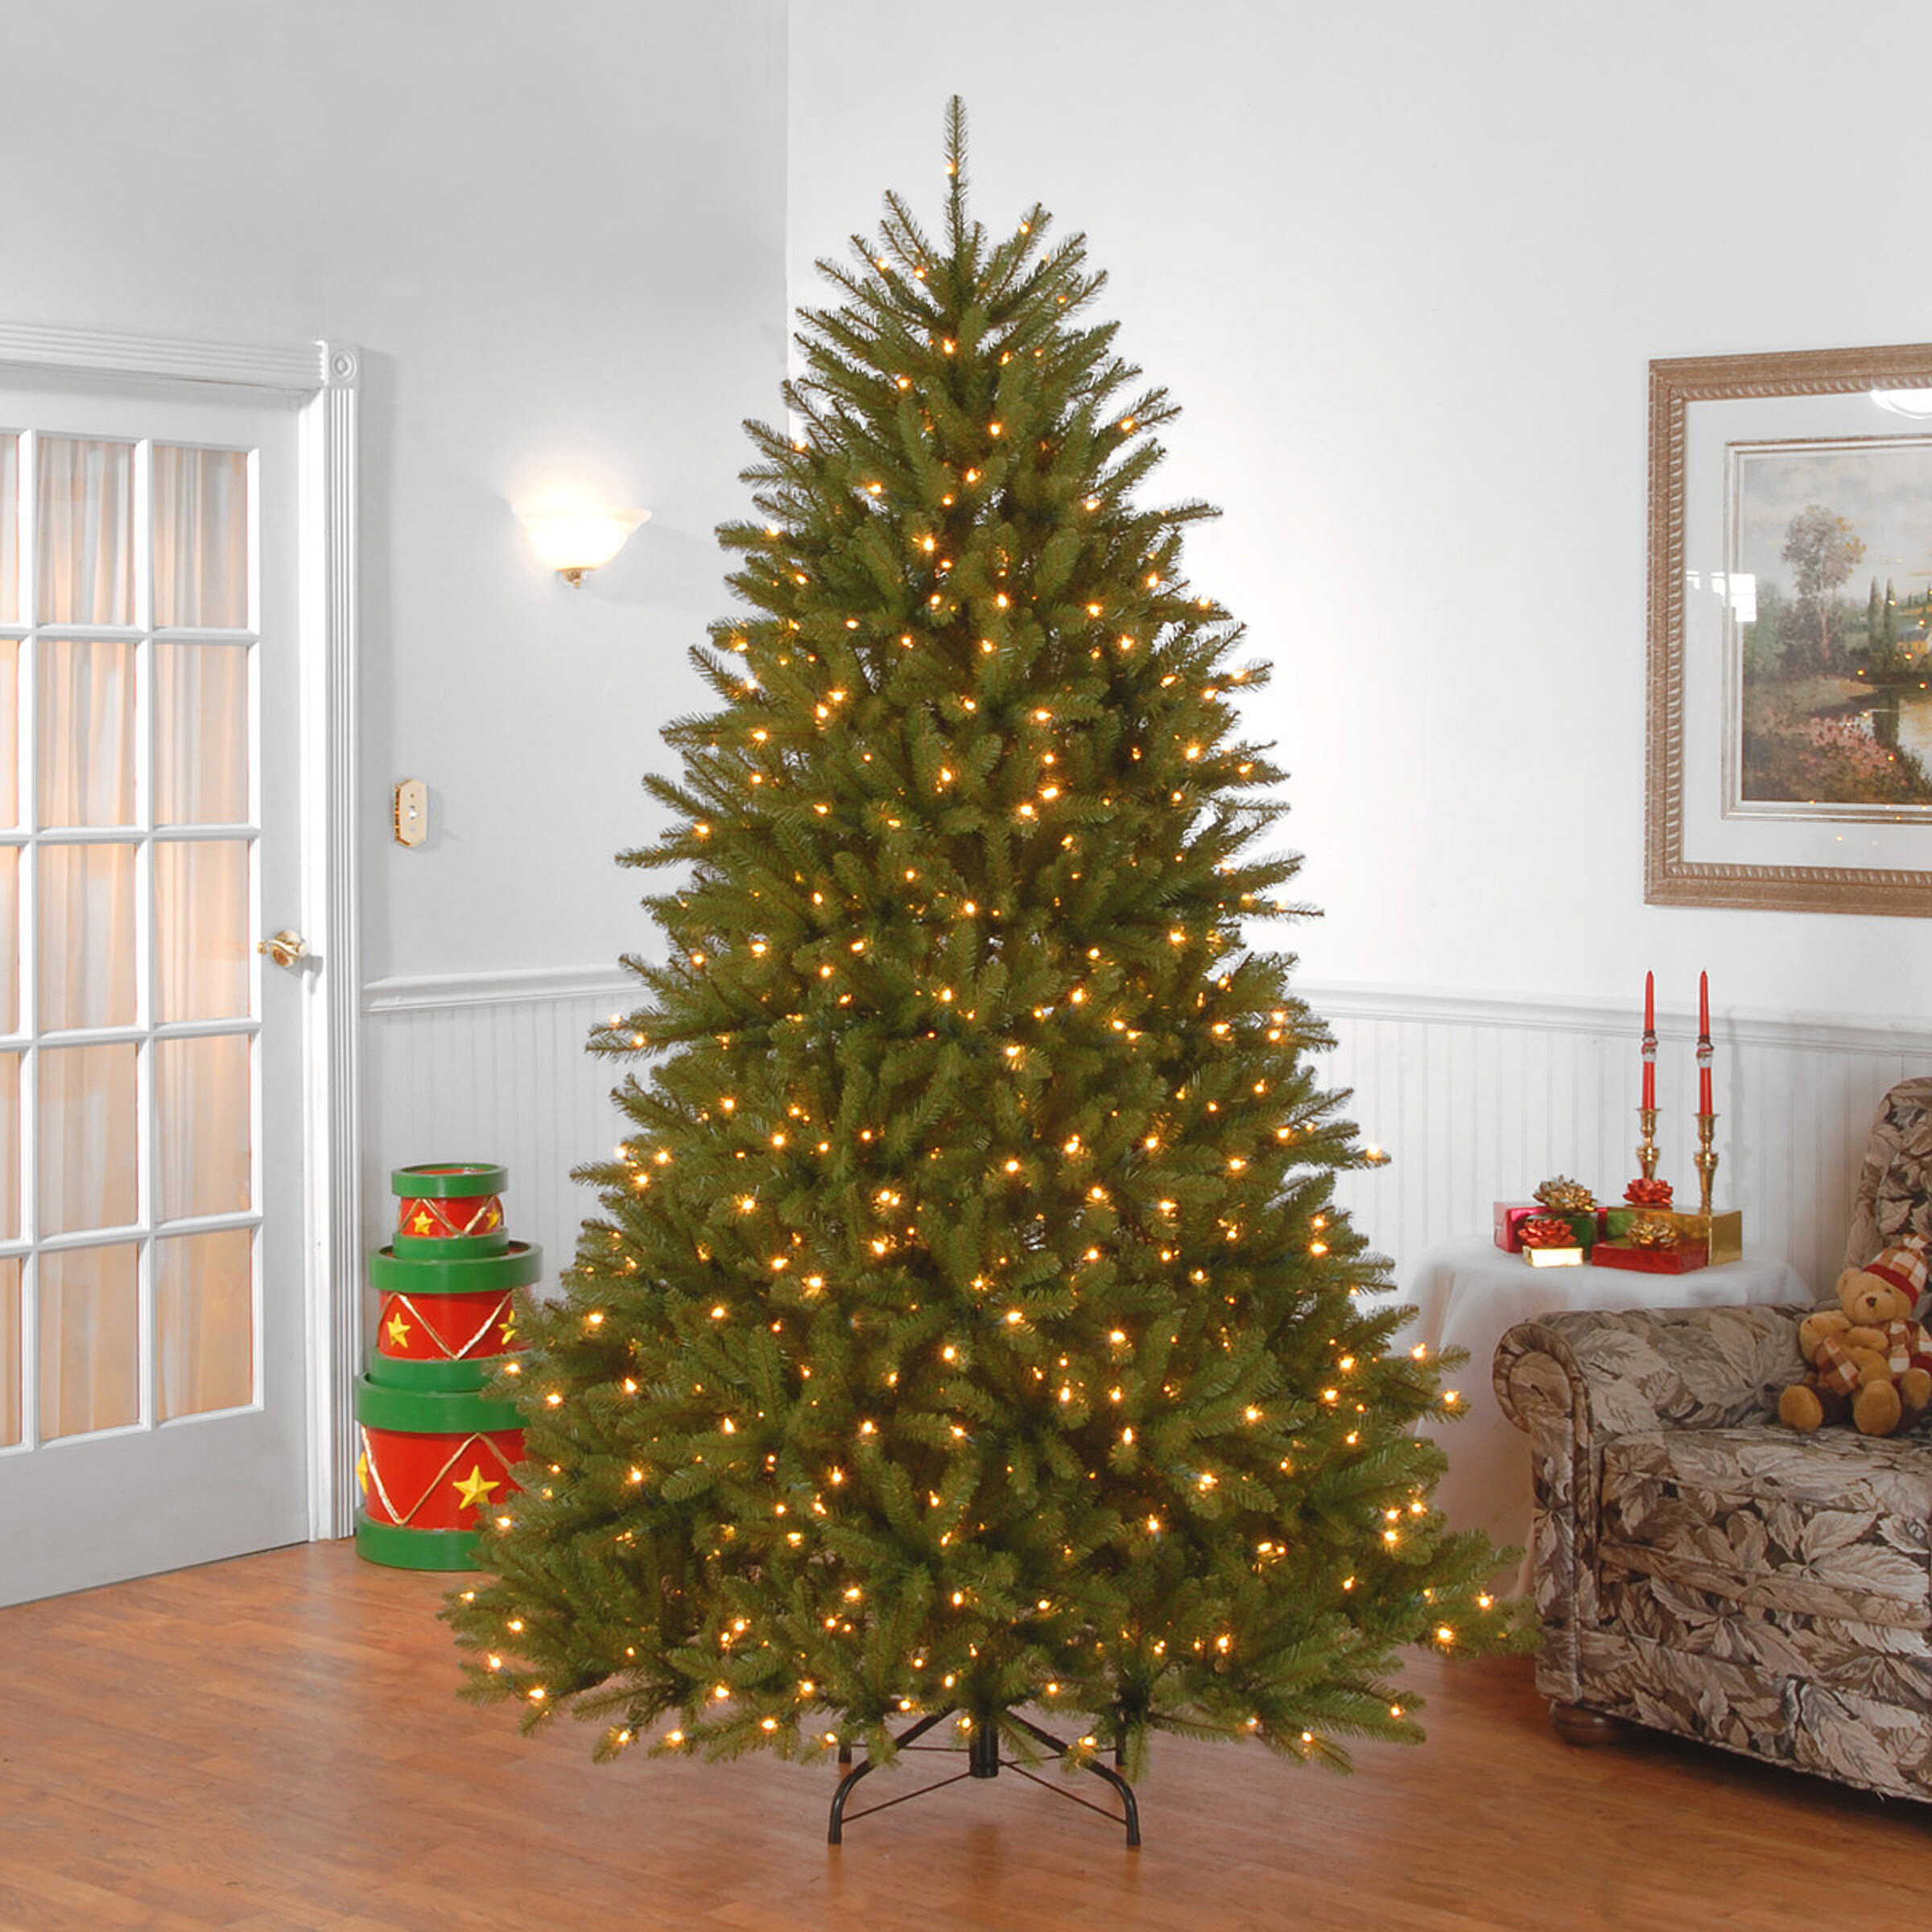 Wayfair Christmas Trees You'll Love in 2023